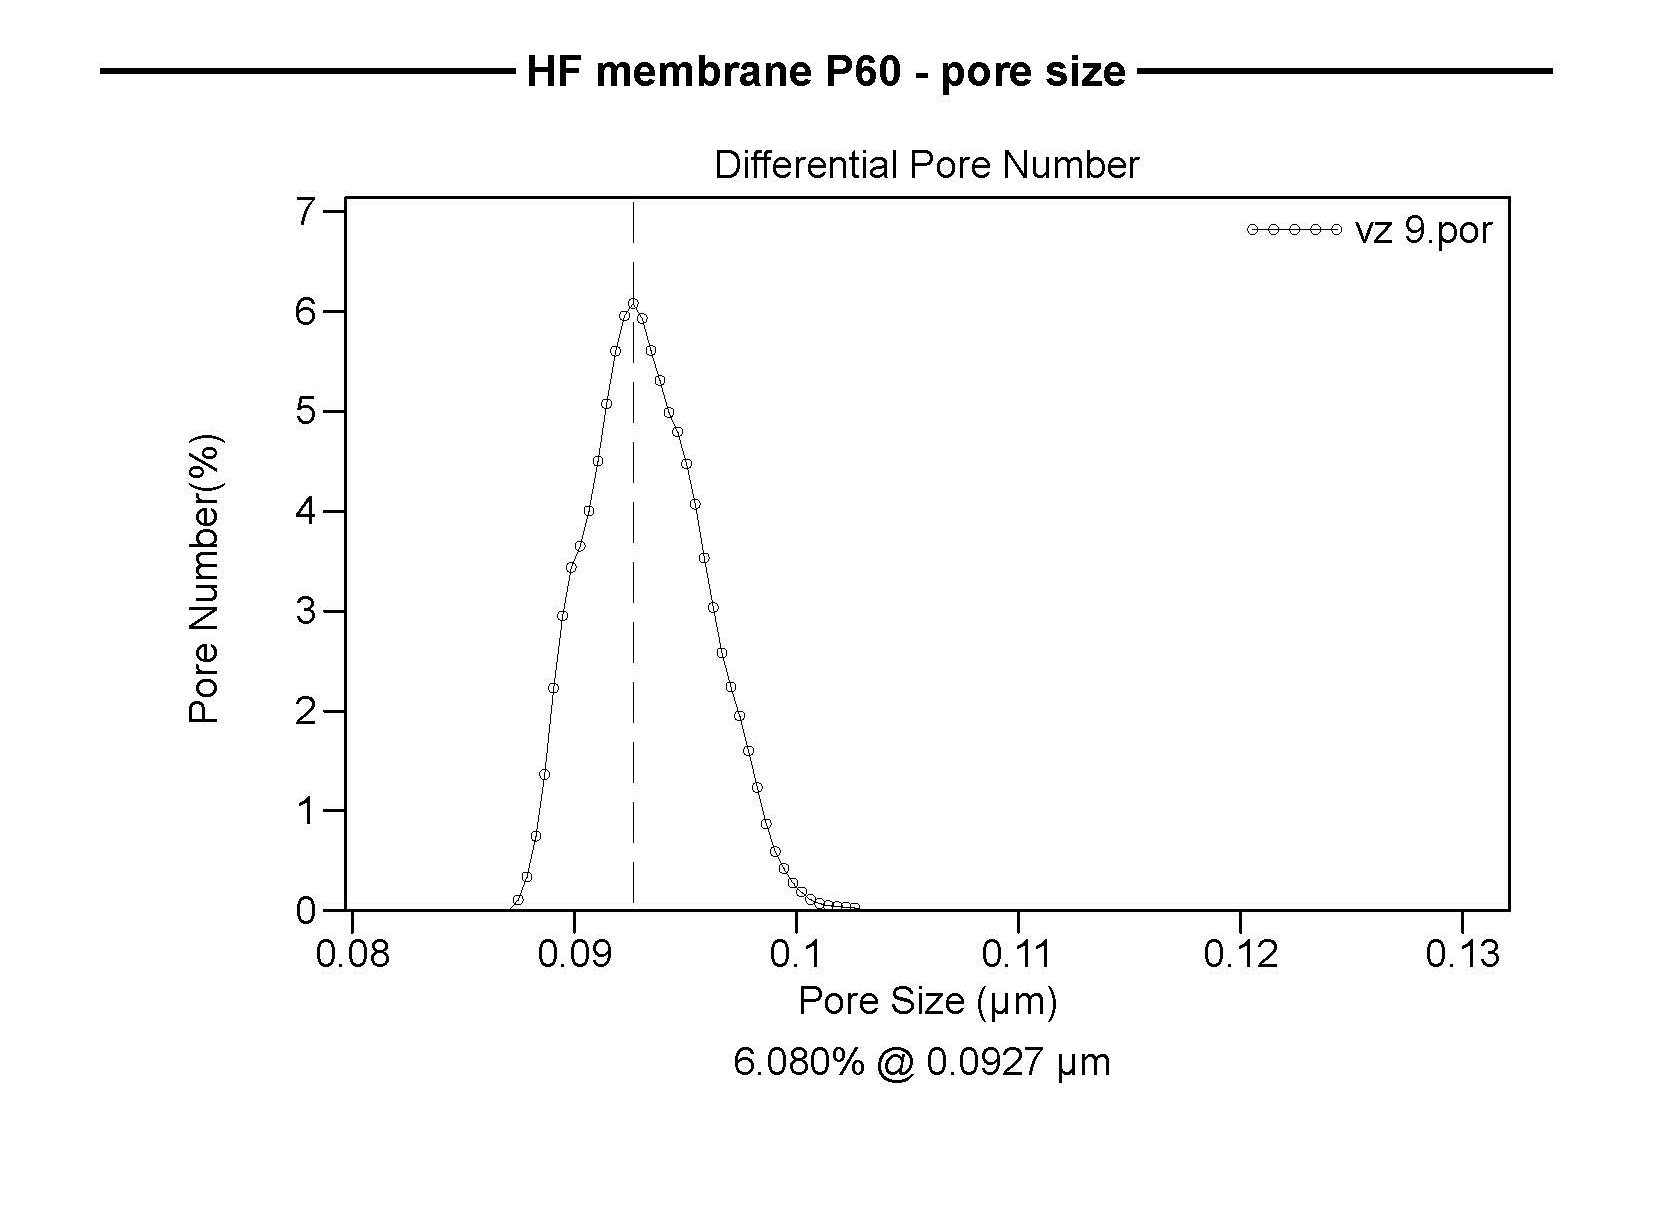 PP membrane pore size distribution 